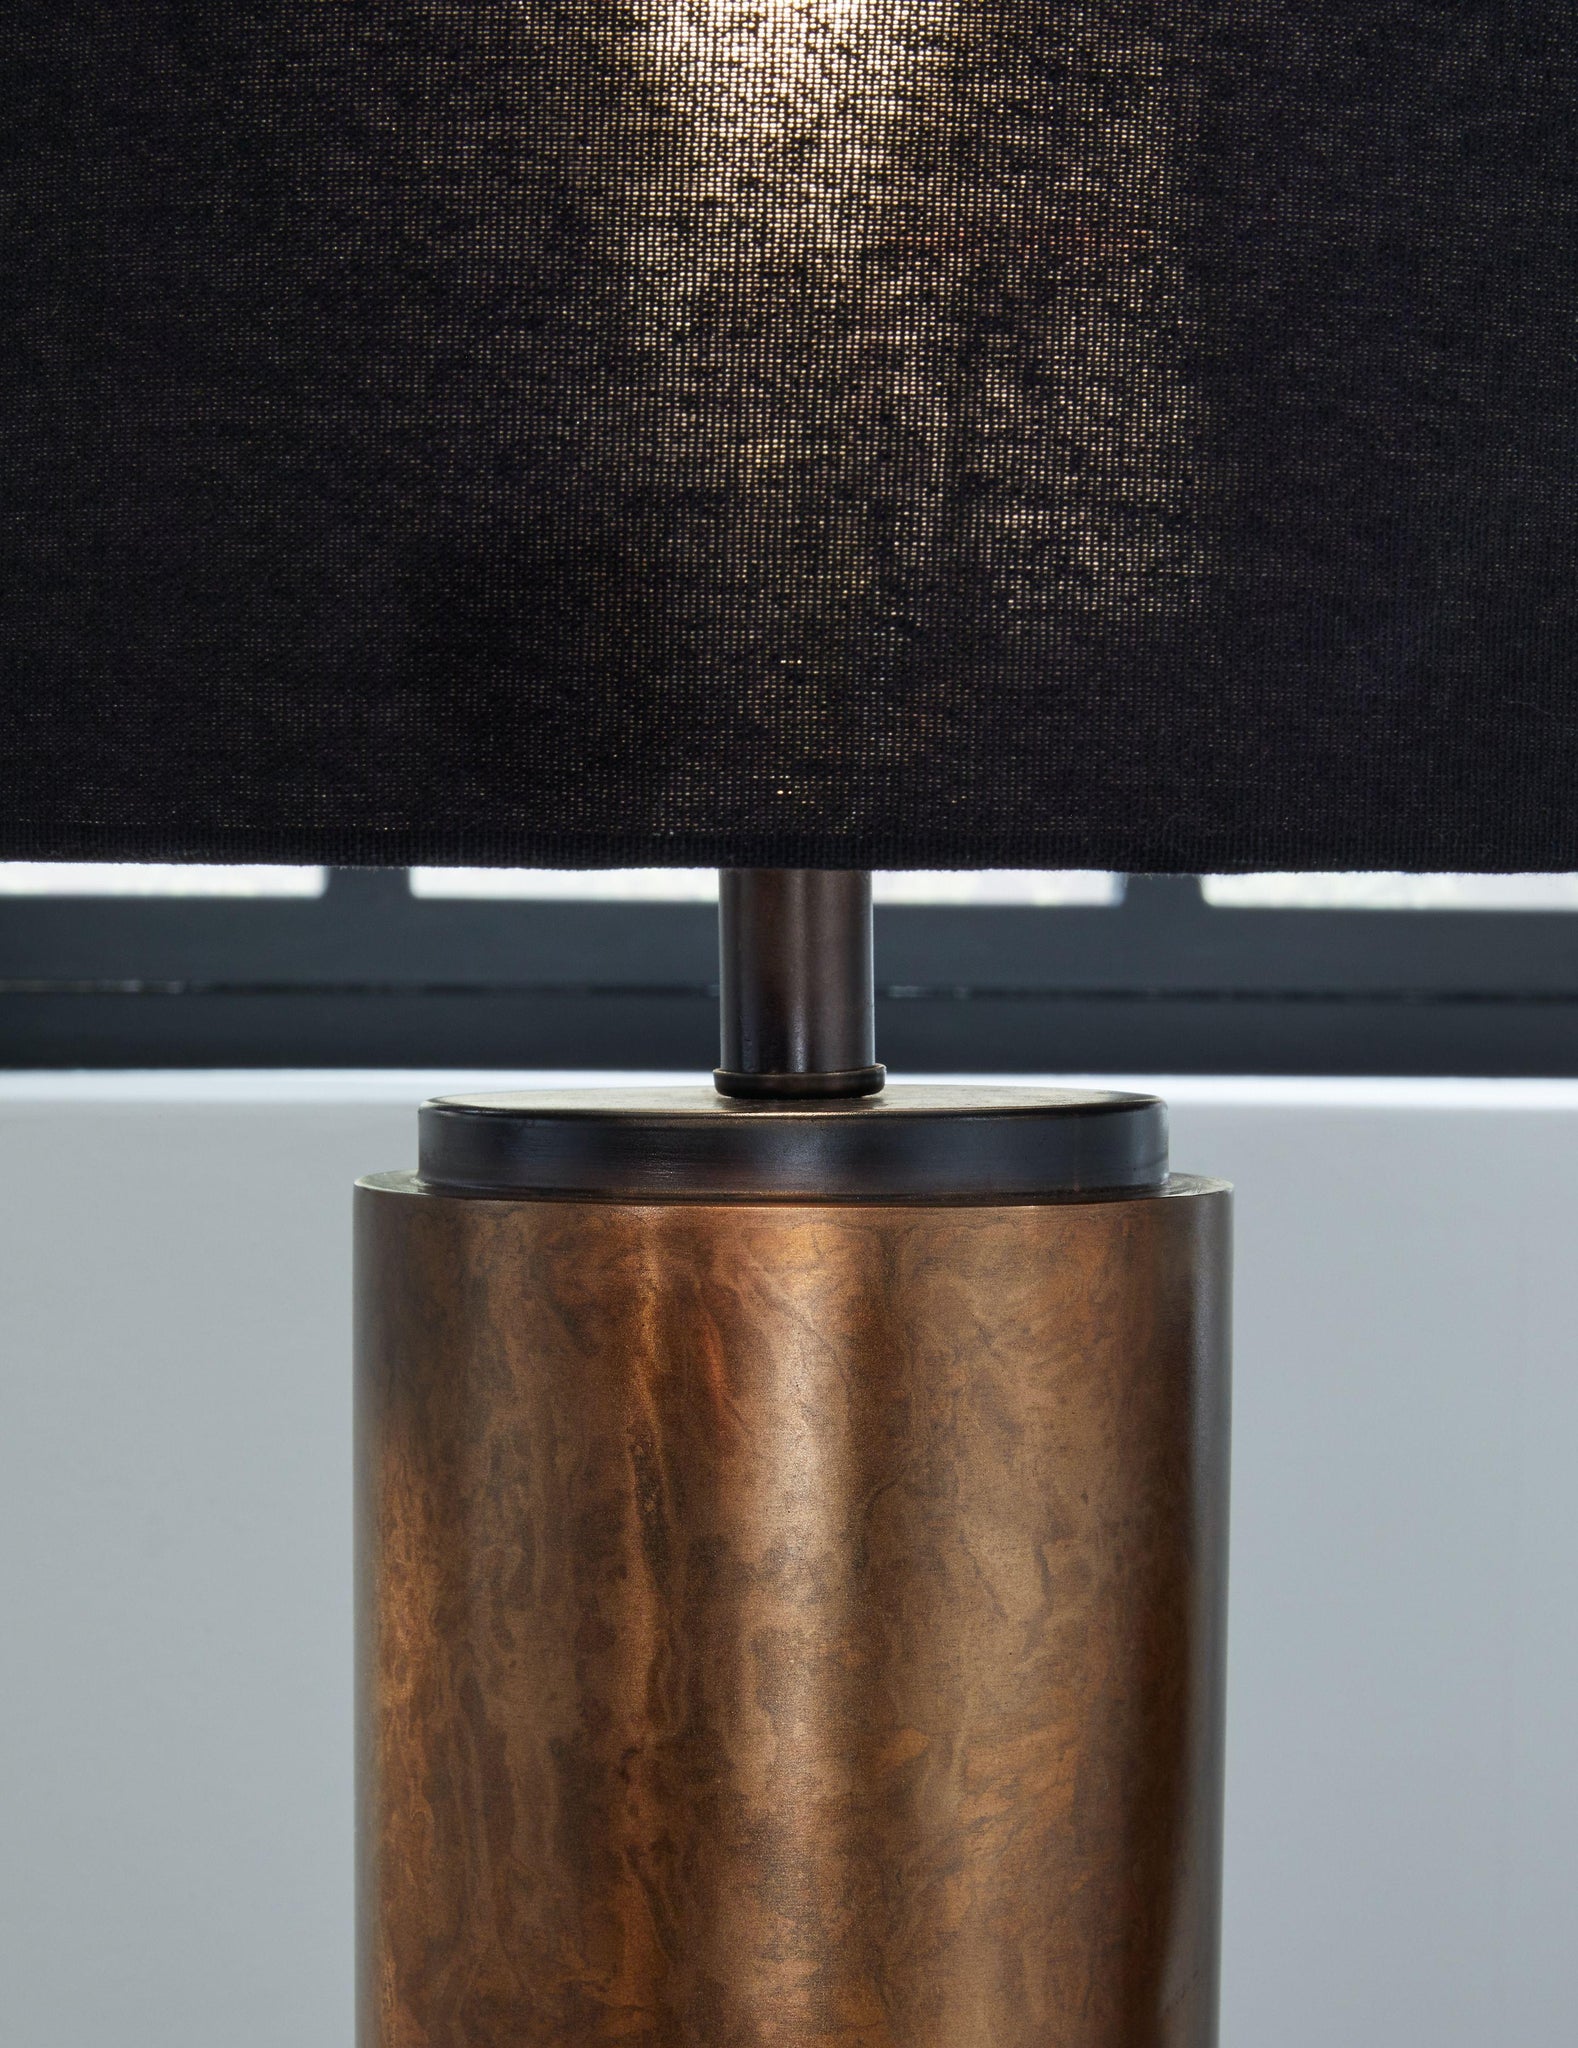 Hildry - Metal Table Lamp (1/cn)